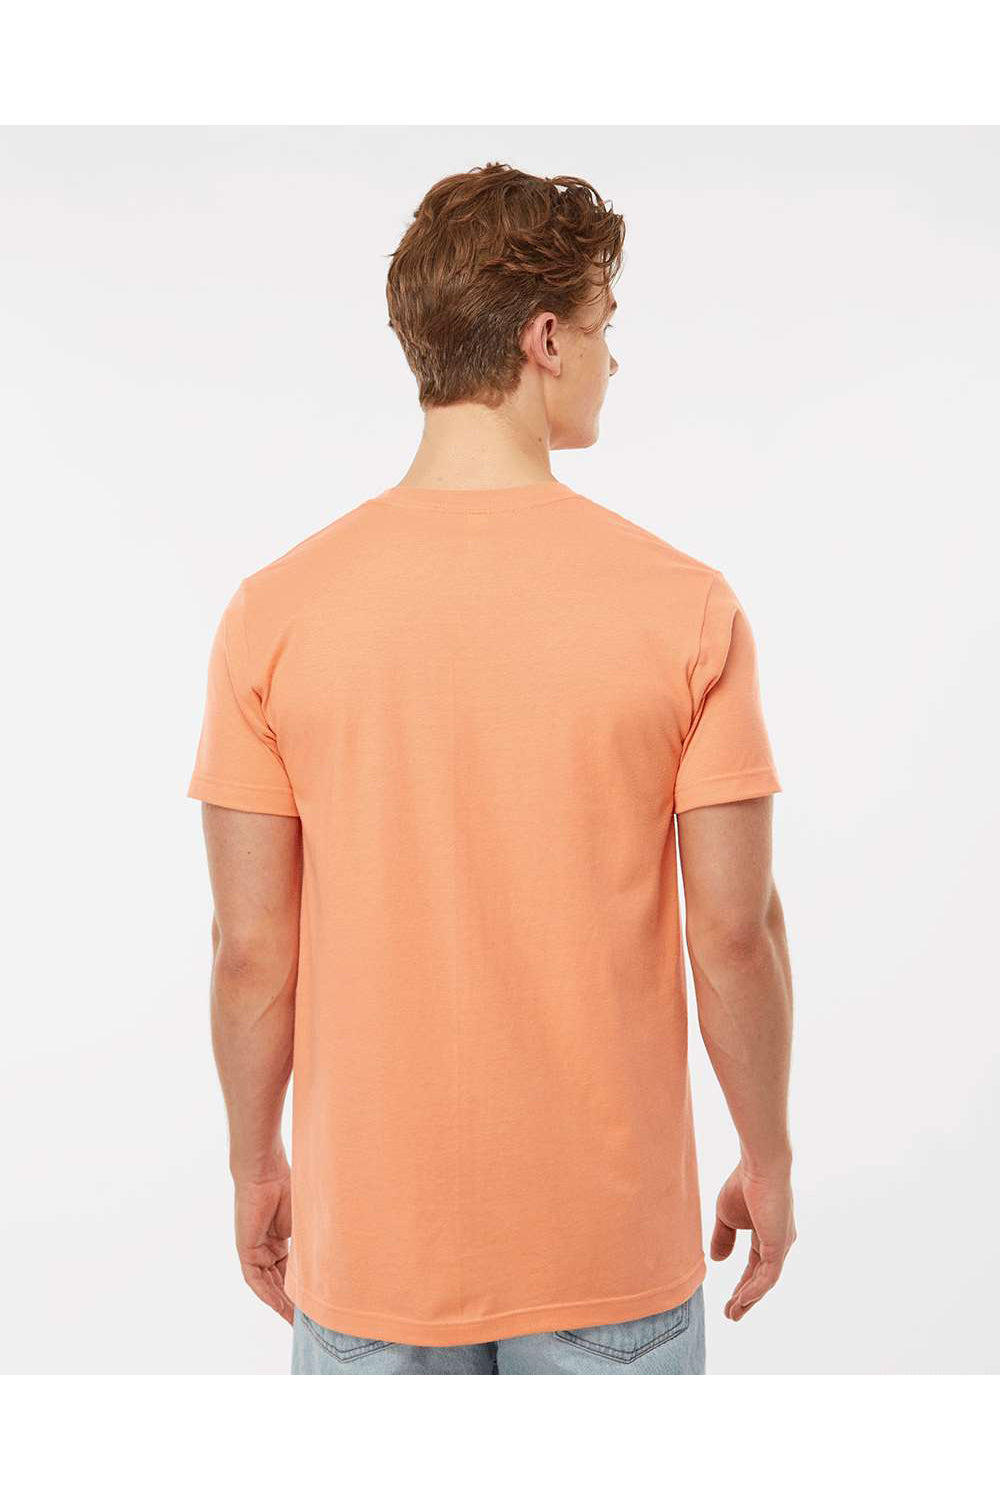 Tultex 202 Mens Fine Jersey Short Sleeve Crewneck T-Shirt Cantaloupe Orange Model Back